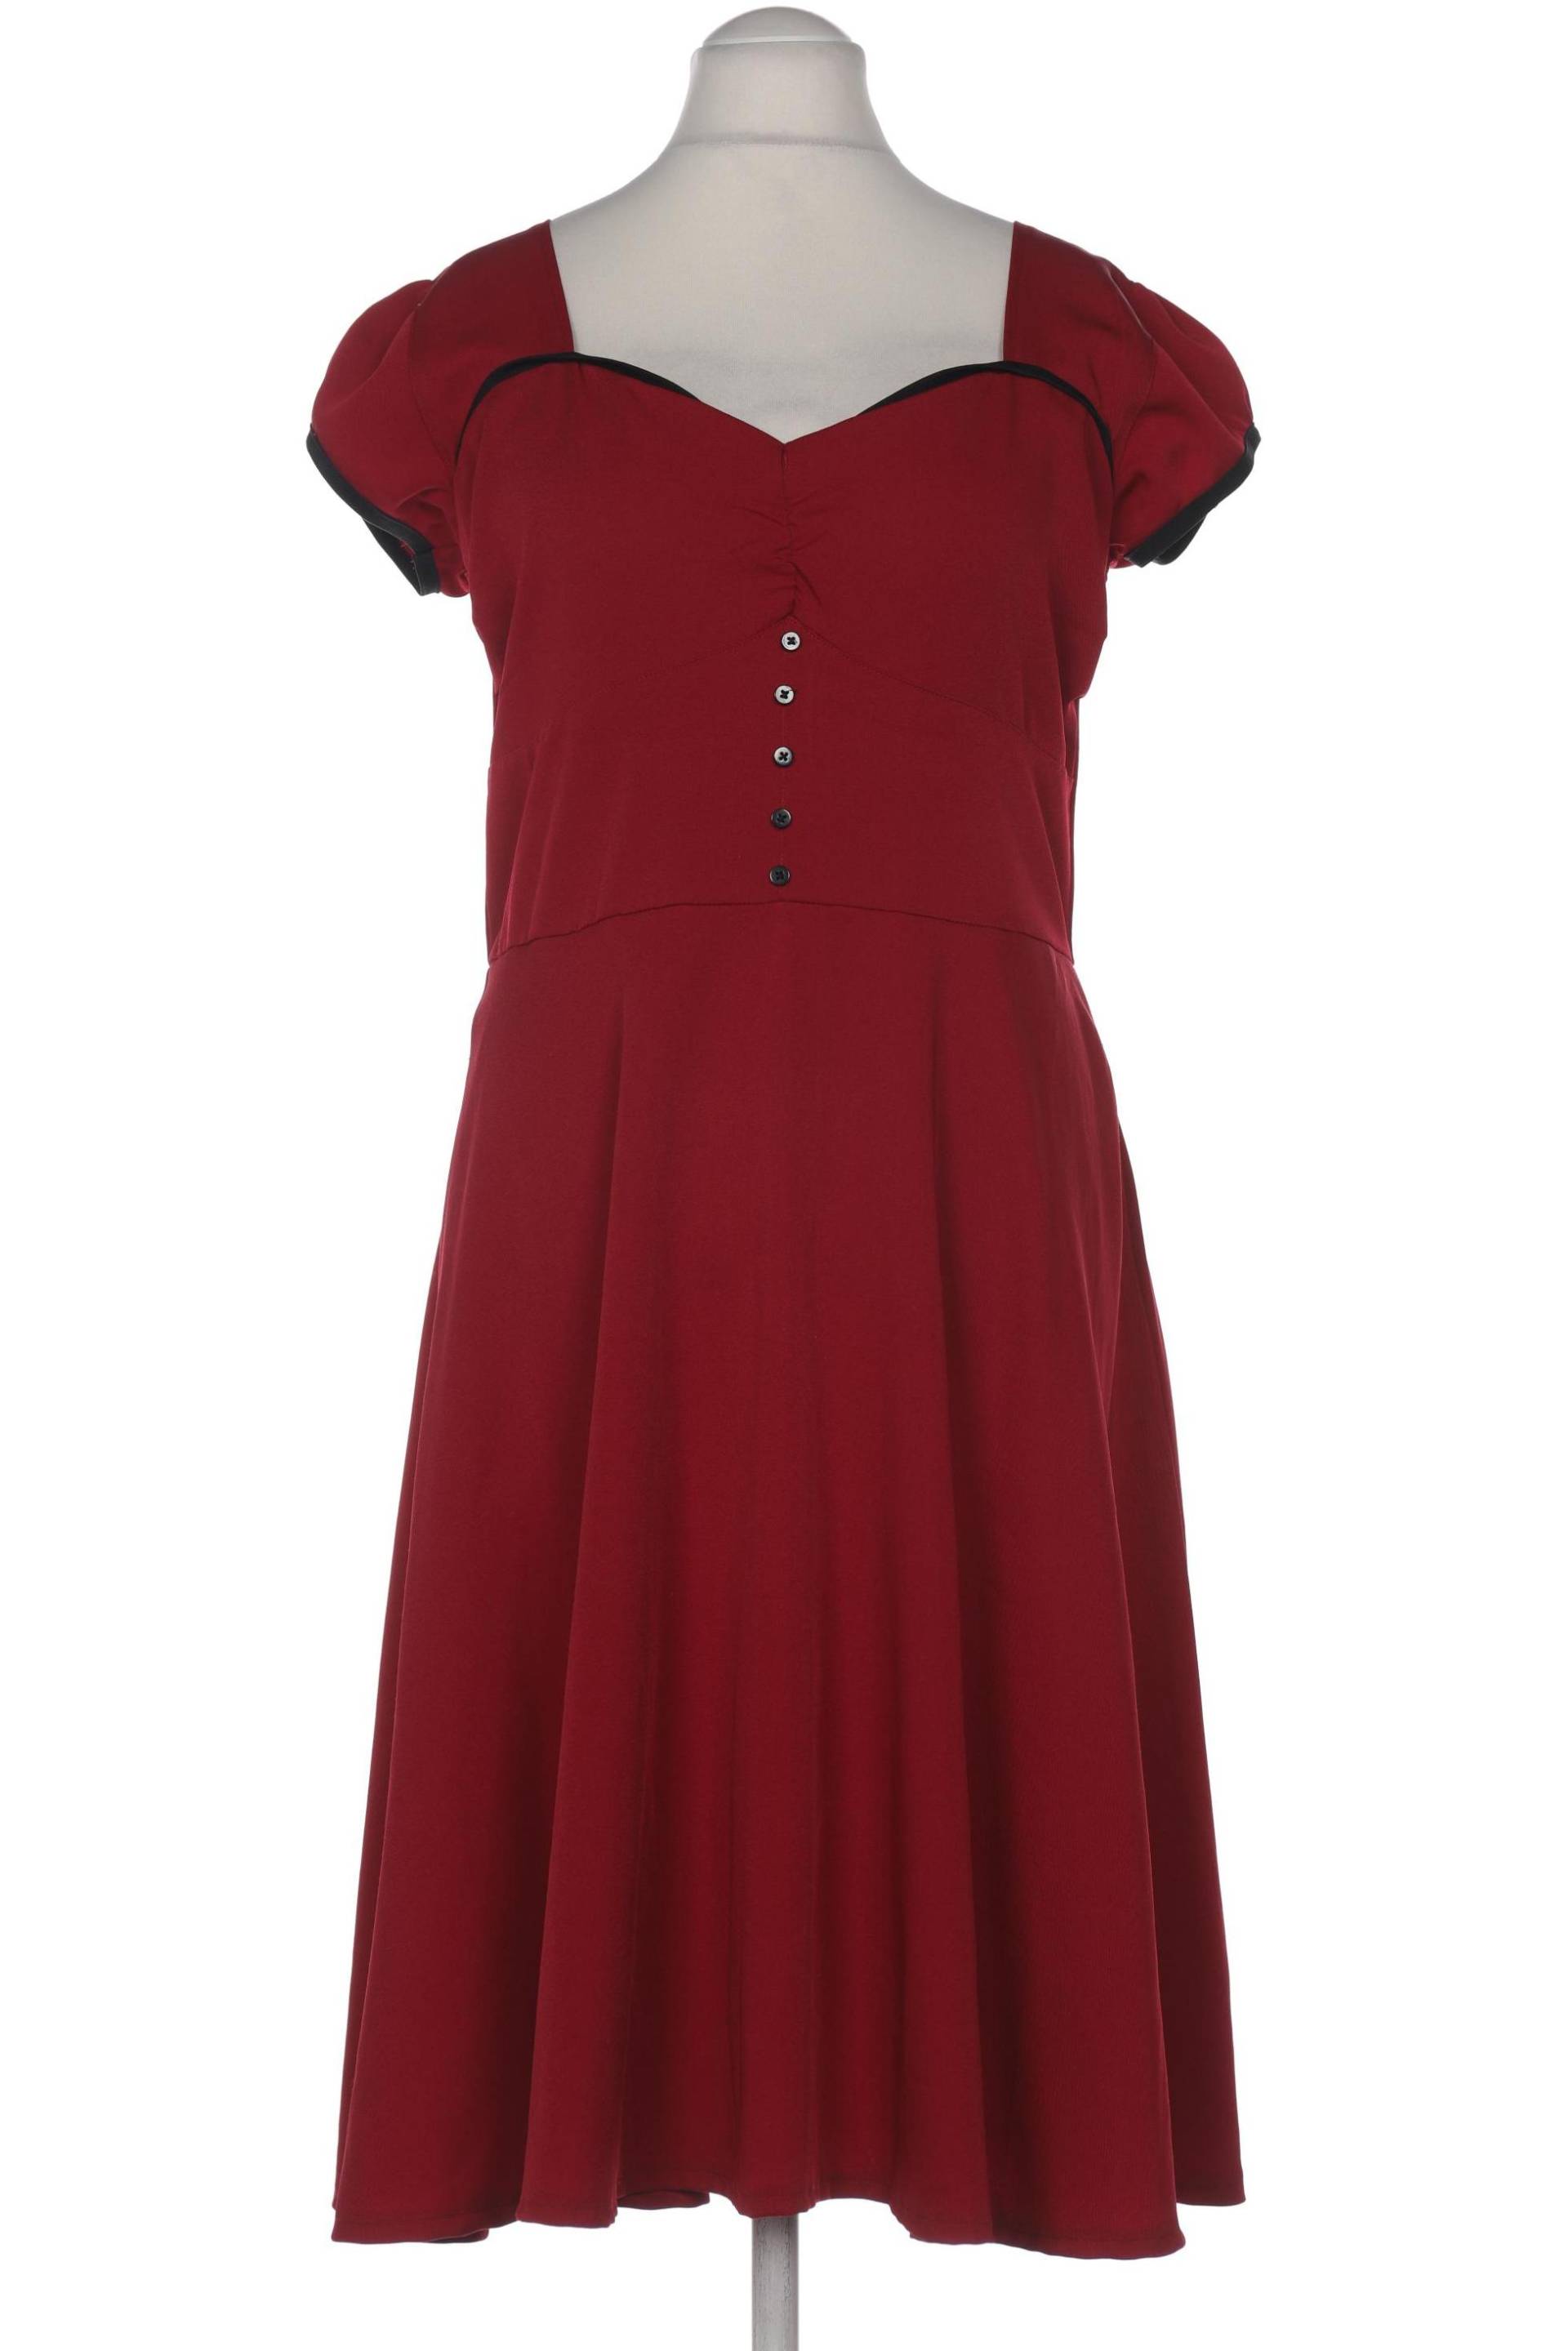 Lindy Bop Damen Kleid, rot, Gr. 44 von lindy bop